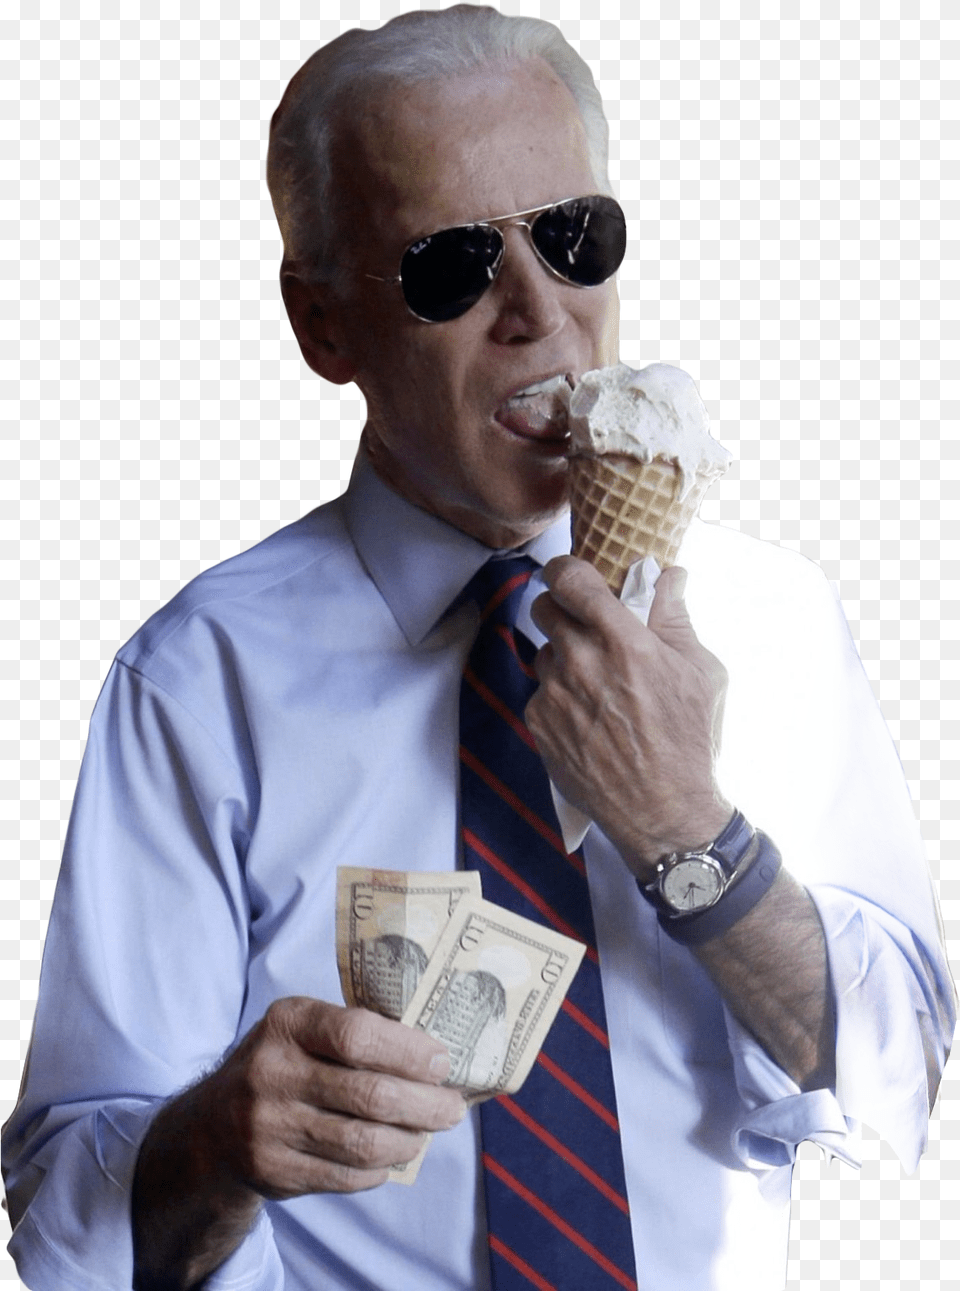 Joe Biden Eating Ice Cream Download Joe Biden Ray Bans, Accessories, Sunglasses, Male, Ice Cream Png